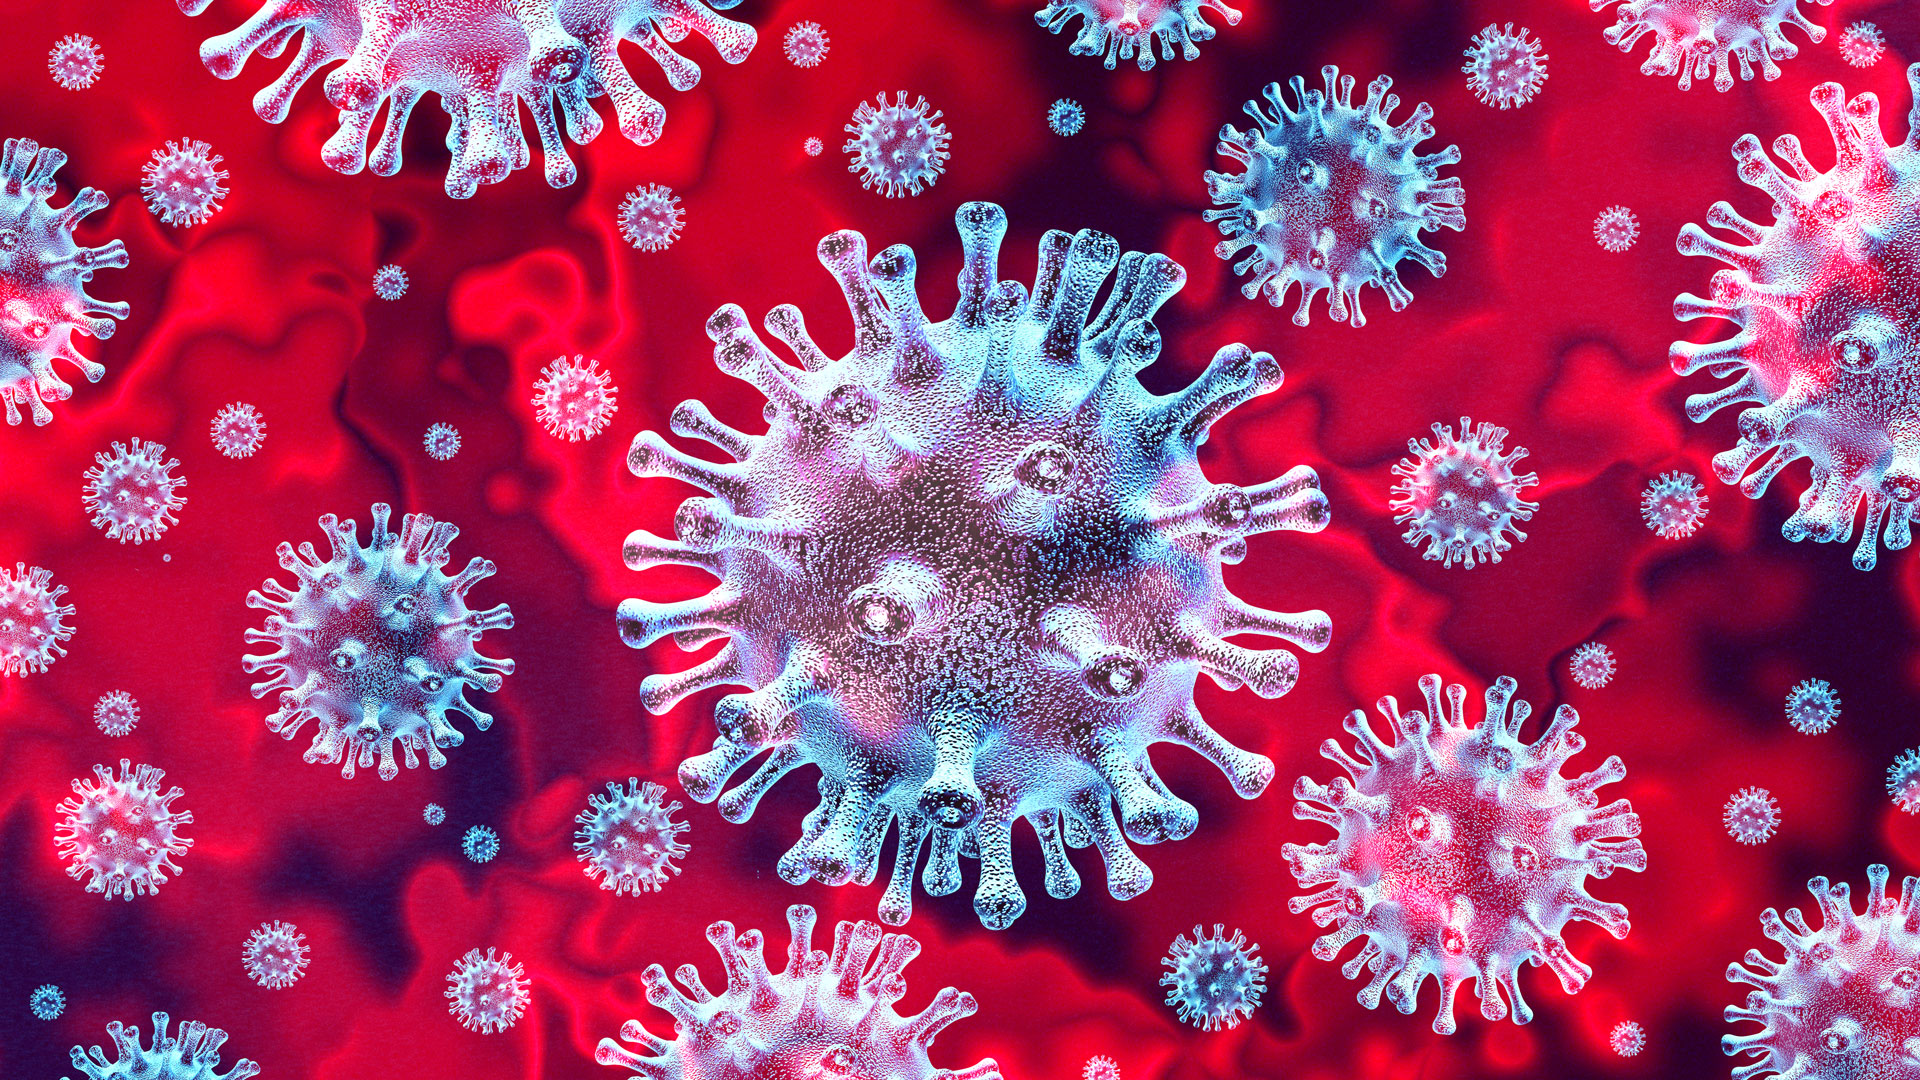 FDA-Authorizes-Widespread-use-of-Chloroquine-to-Treat-Coronavirus